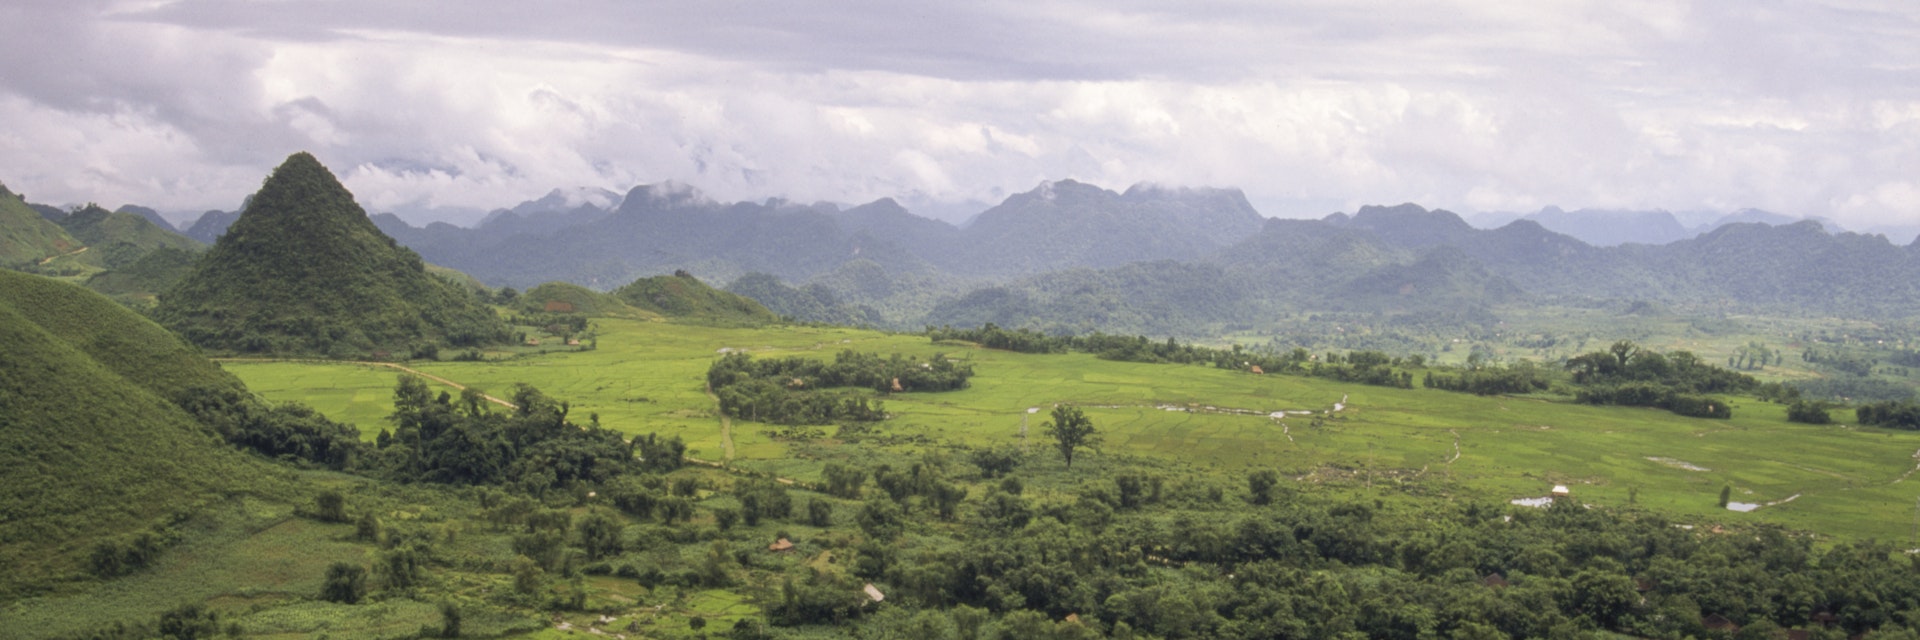 The scenic green valley of Mai Chau